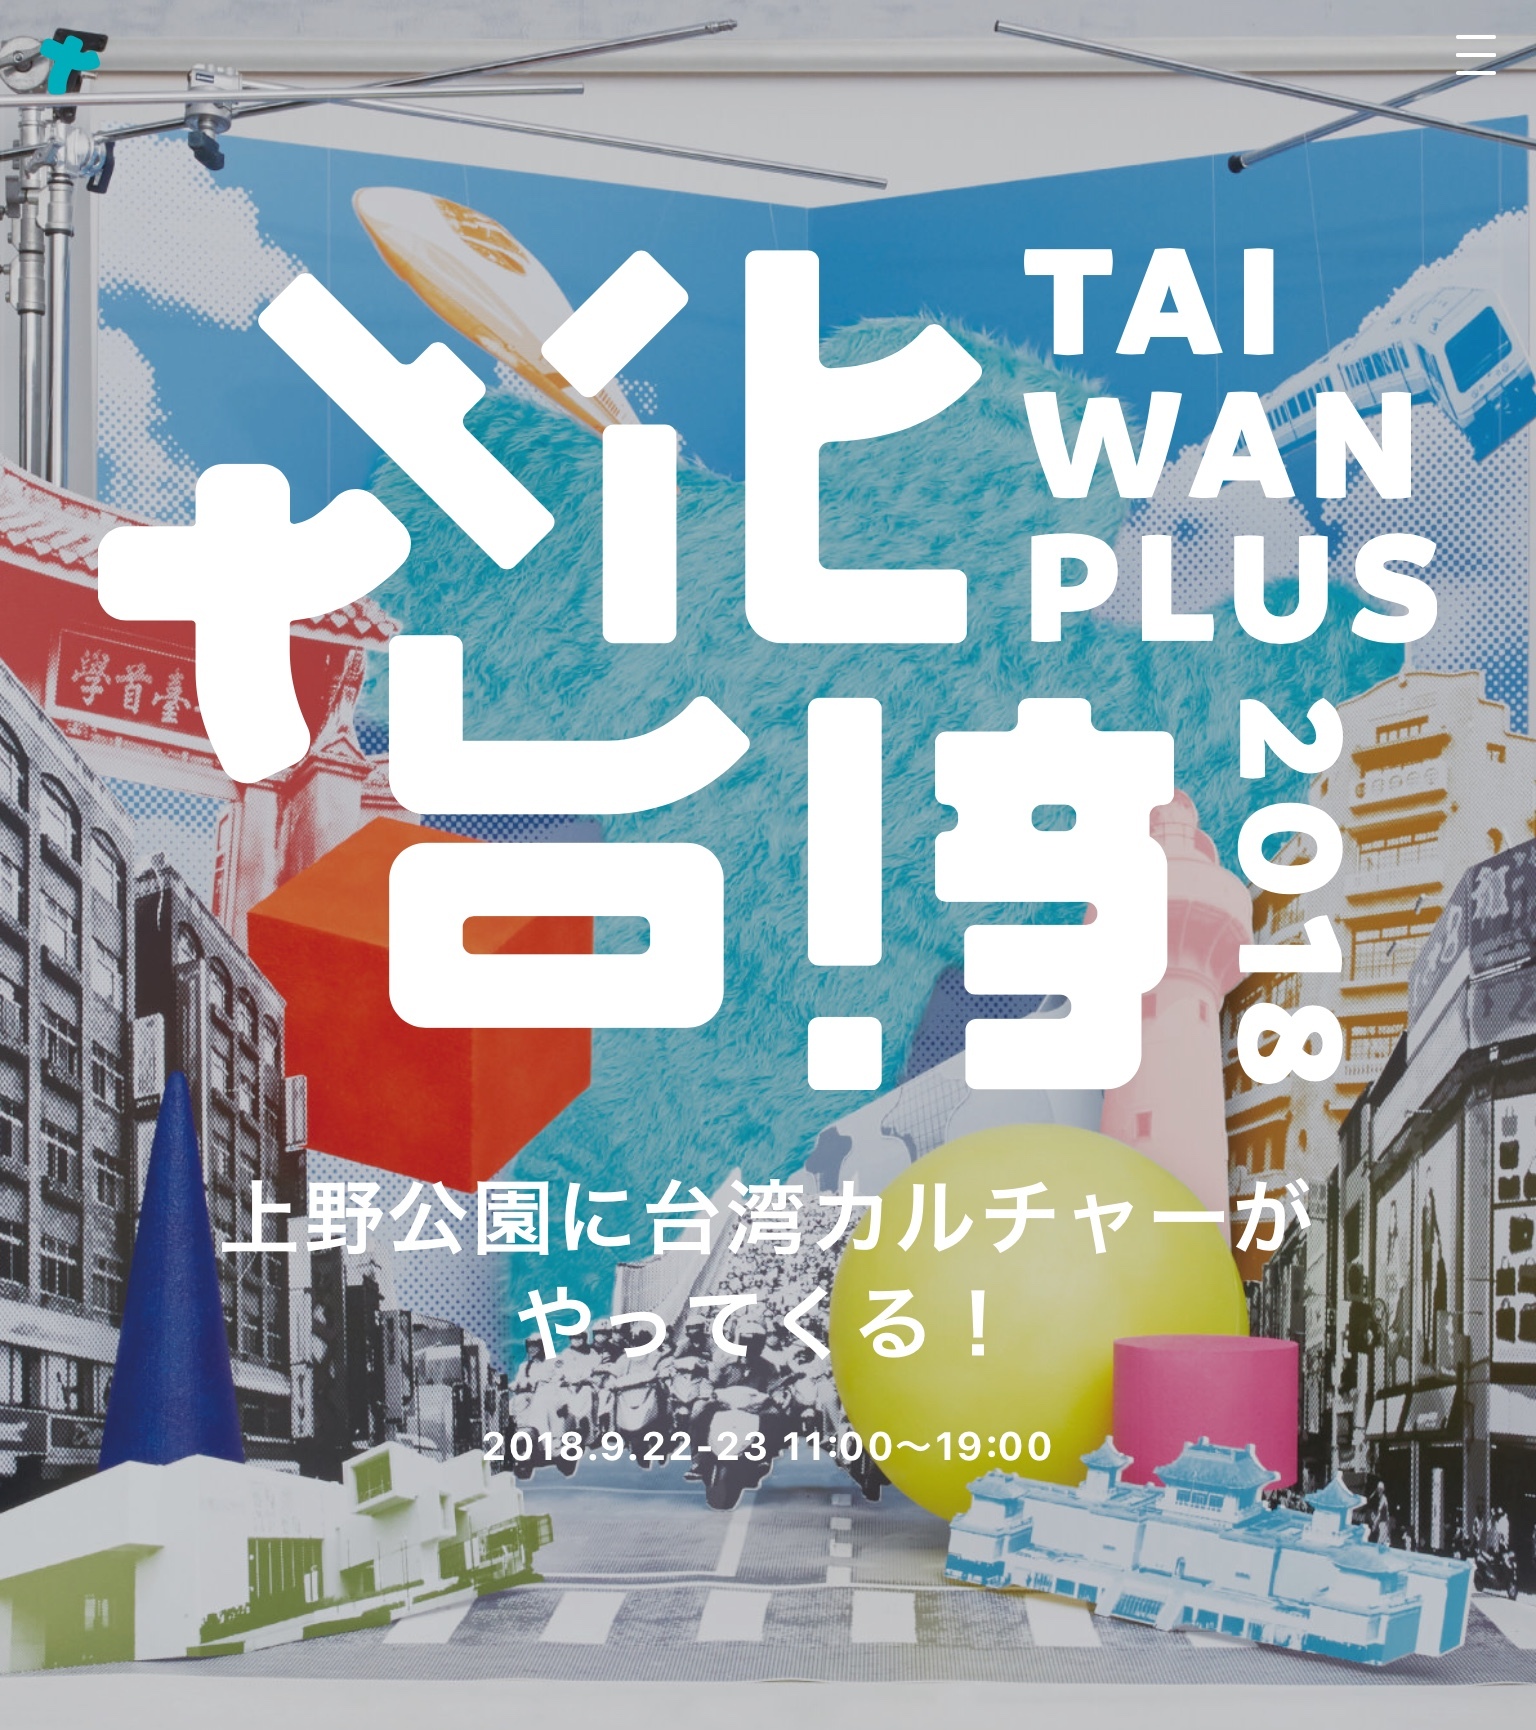 9/22、23 『Taiwan Plus 2018 文化台湾』晒日子の展示会場で古来種野菜を展示します。